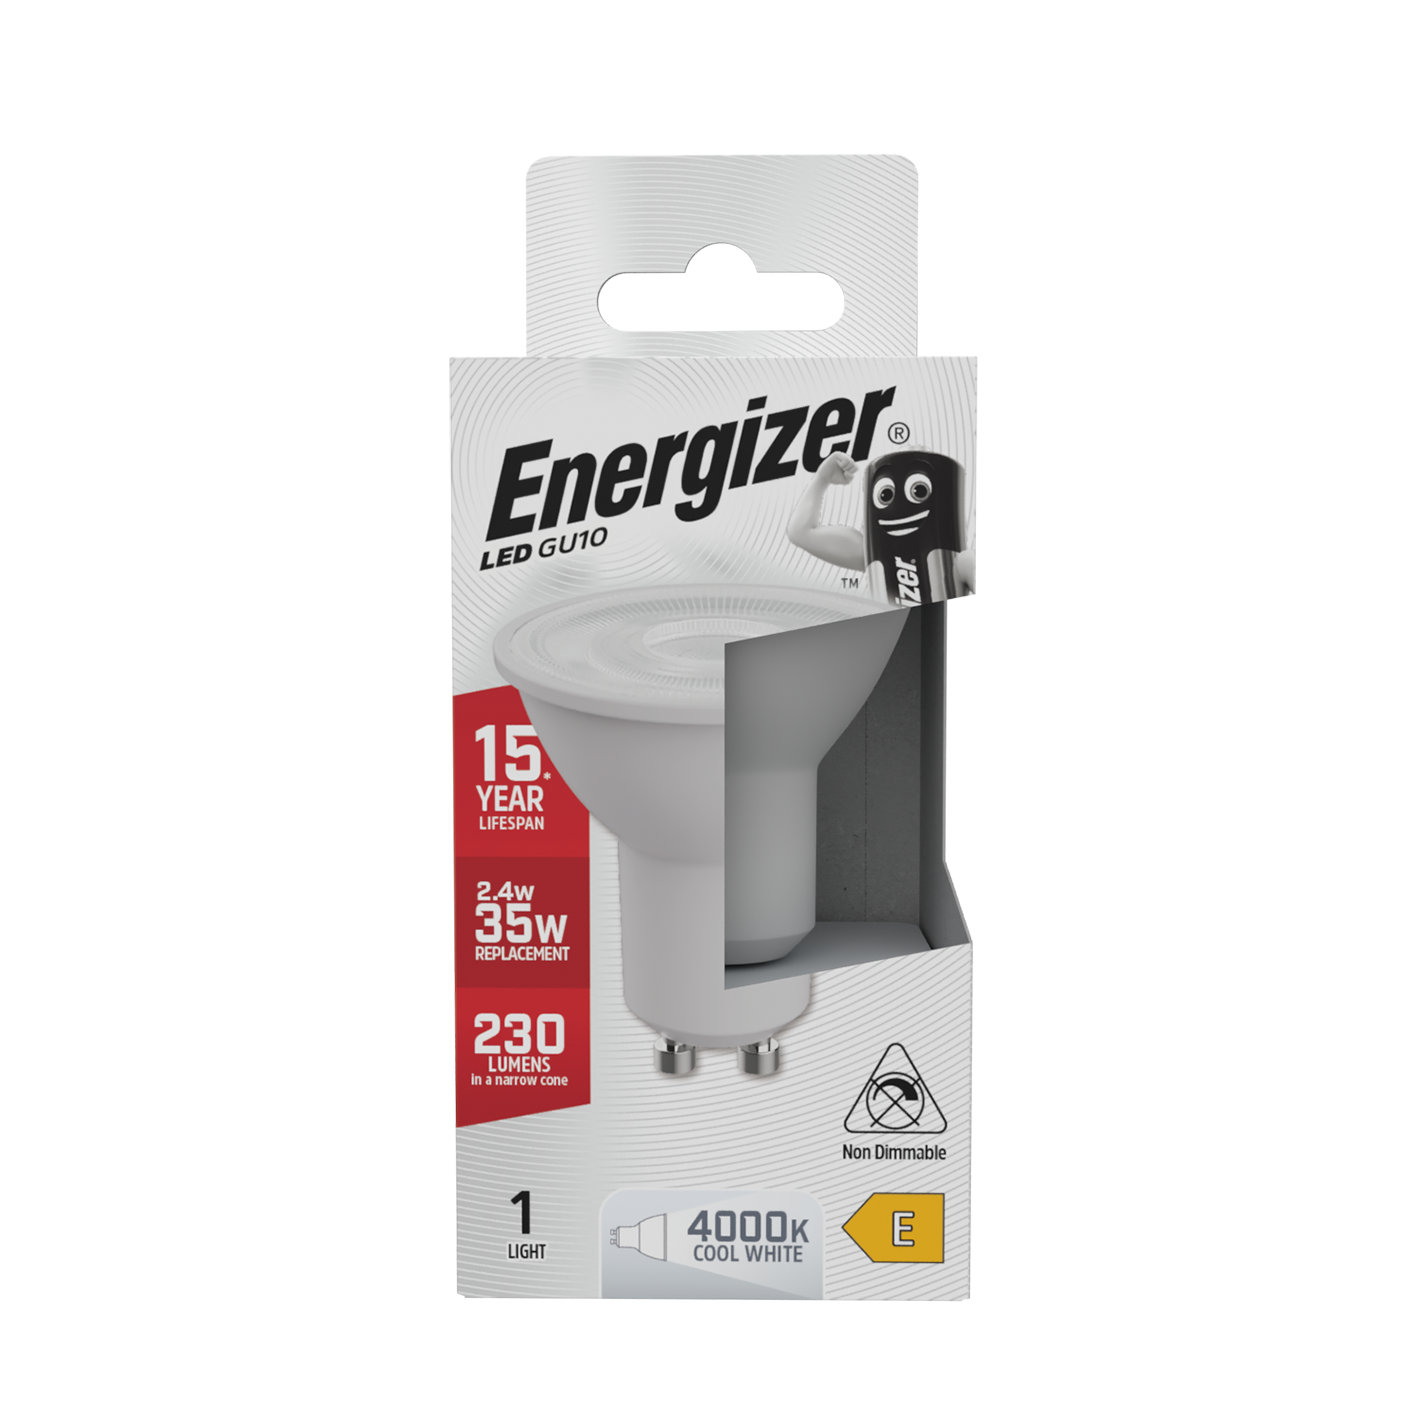 Energizer LED GU10 230 Lumens 2.4W 4,000K (Cool White), Box of 1